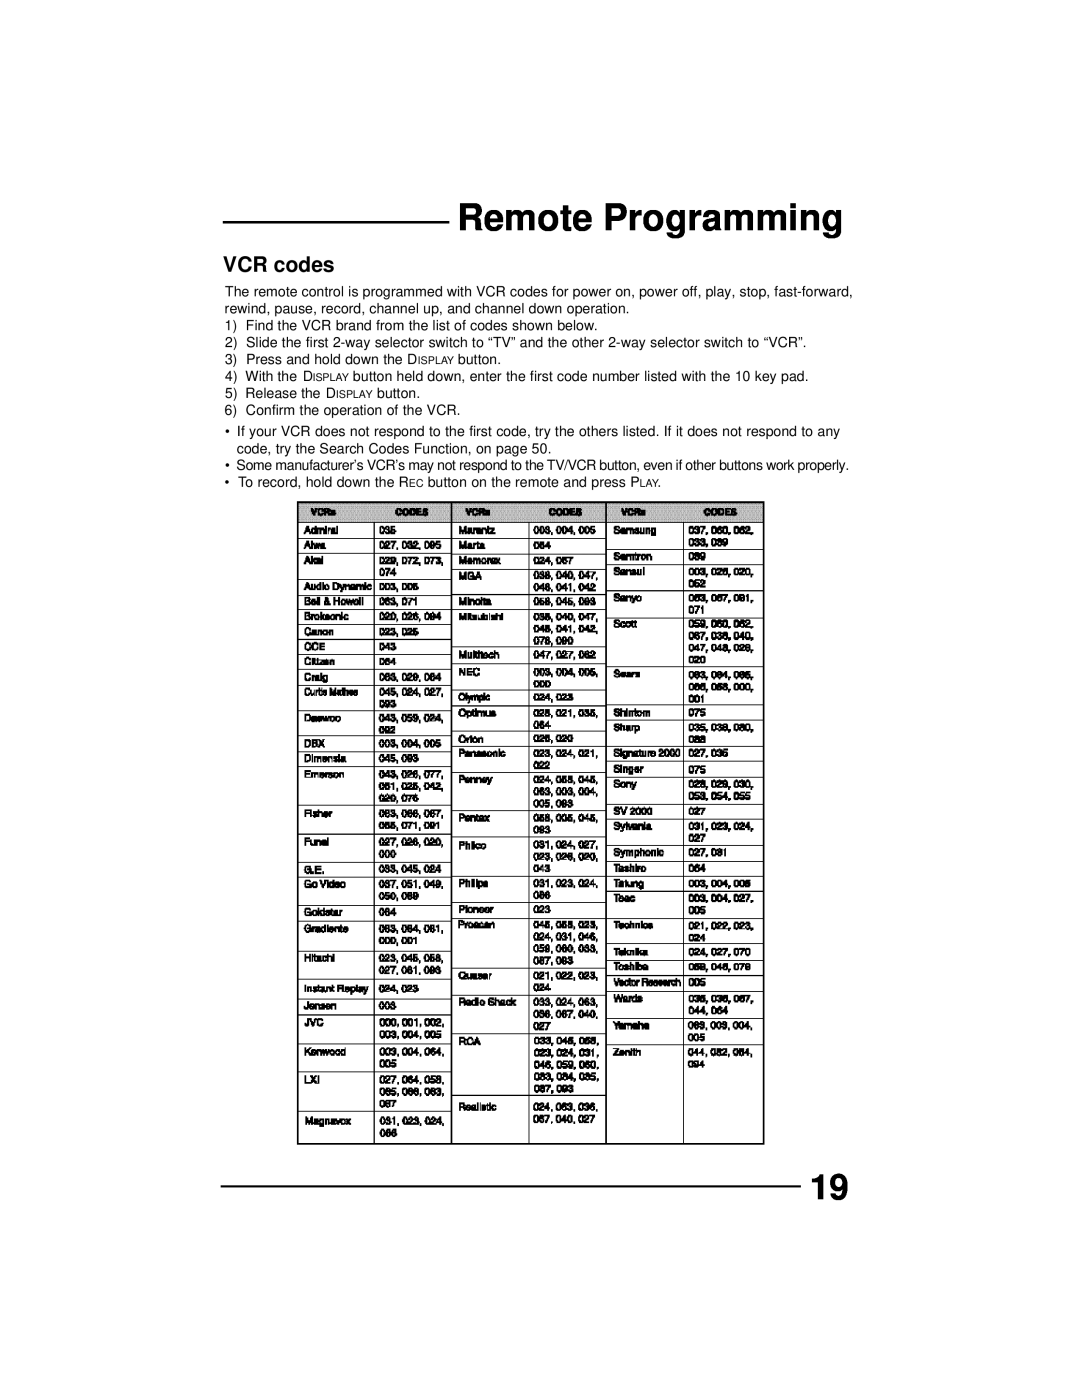 JVC AV 27D502, AV 36D202, AV 36D502, AV 36D302, AV 32D302, AV 32D502, AV 32D202 manual VCR codes, Remote Programming 